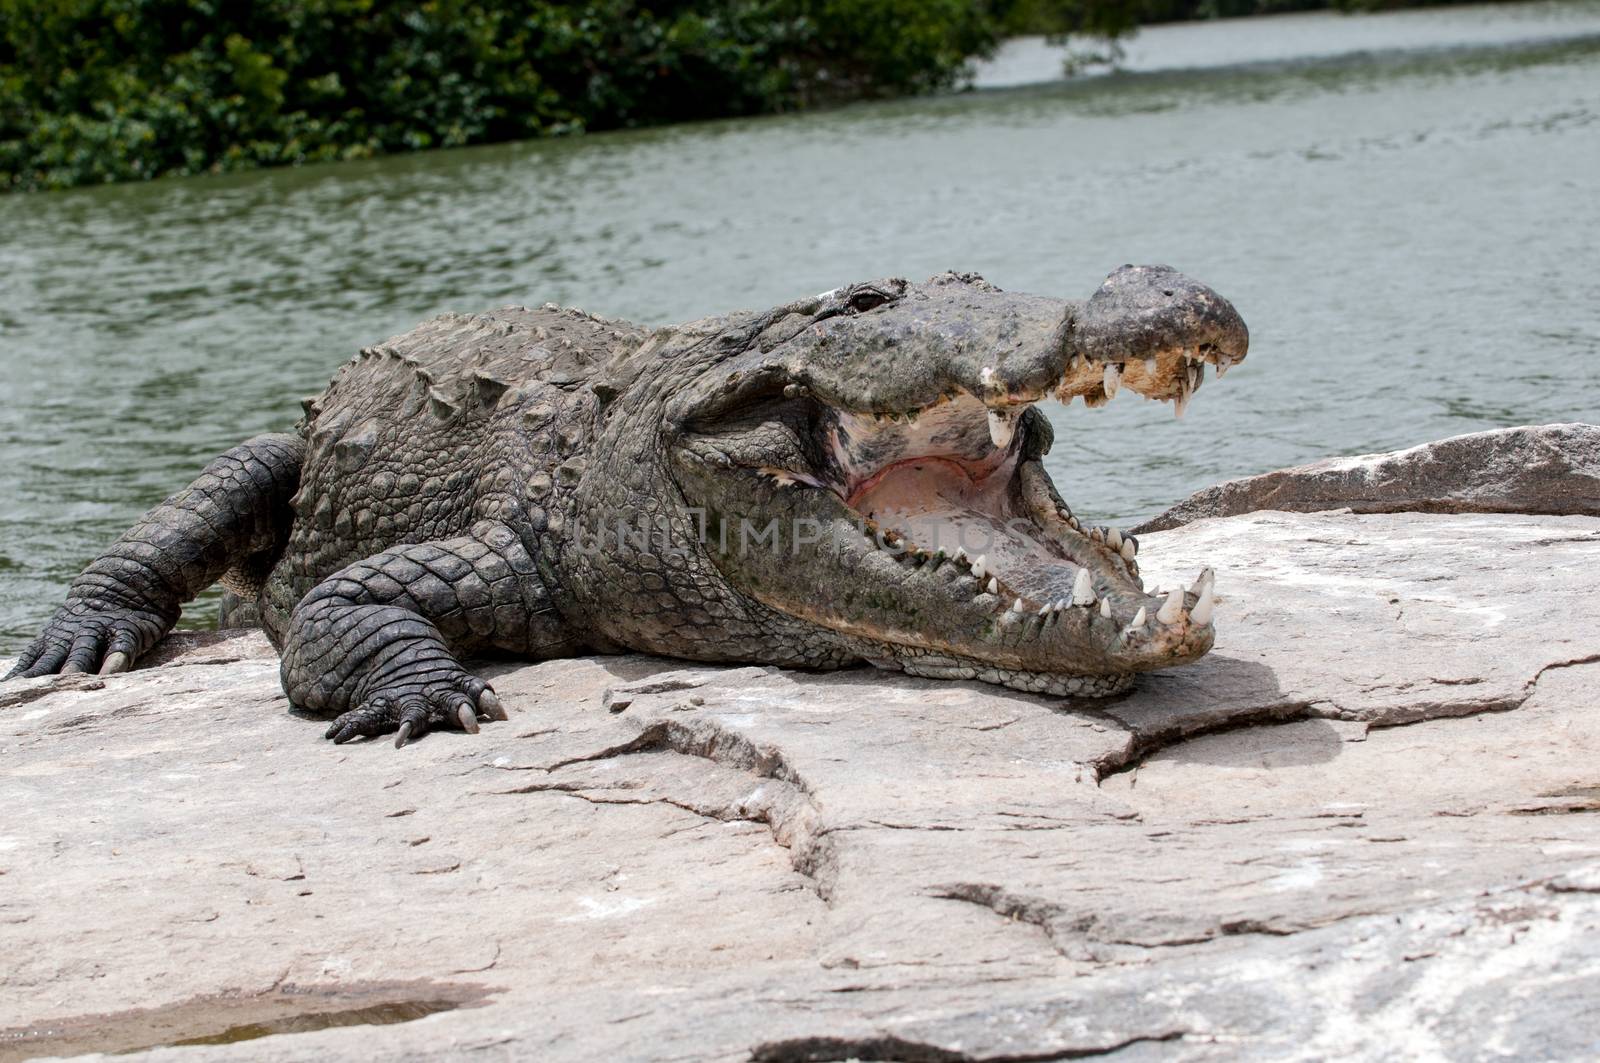 An indian marsh crocodile basking in the sun